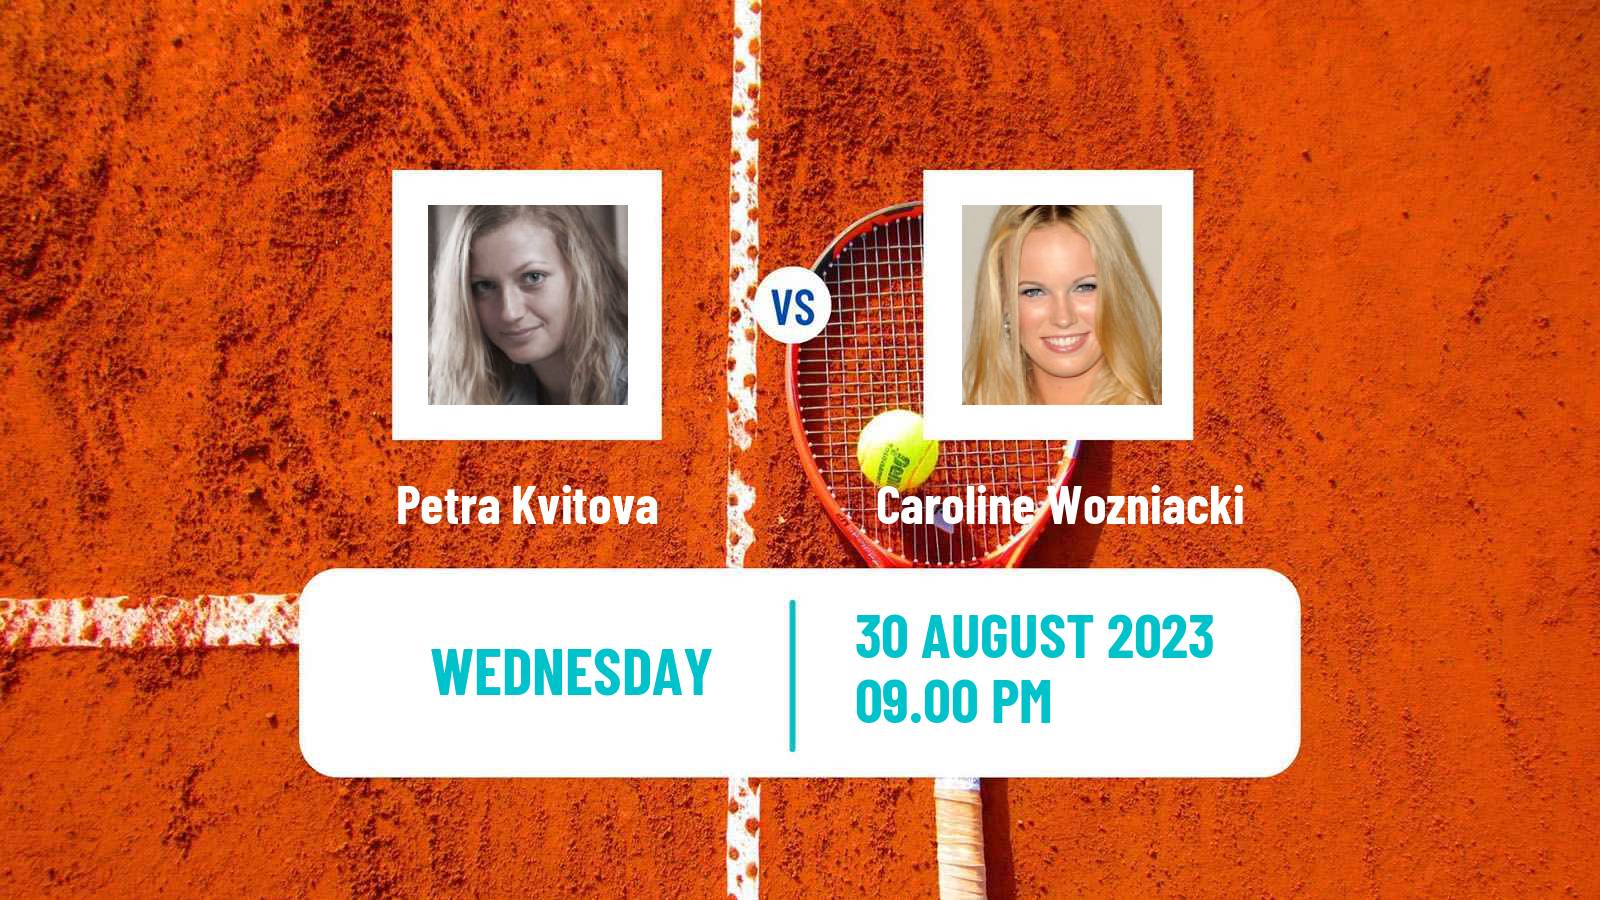 Tennis WTA US Open Petra Kvitova - Caroline Wozniacki